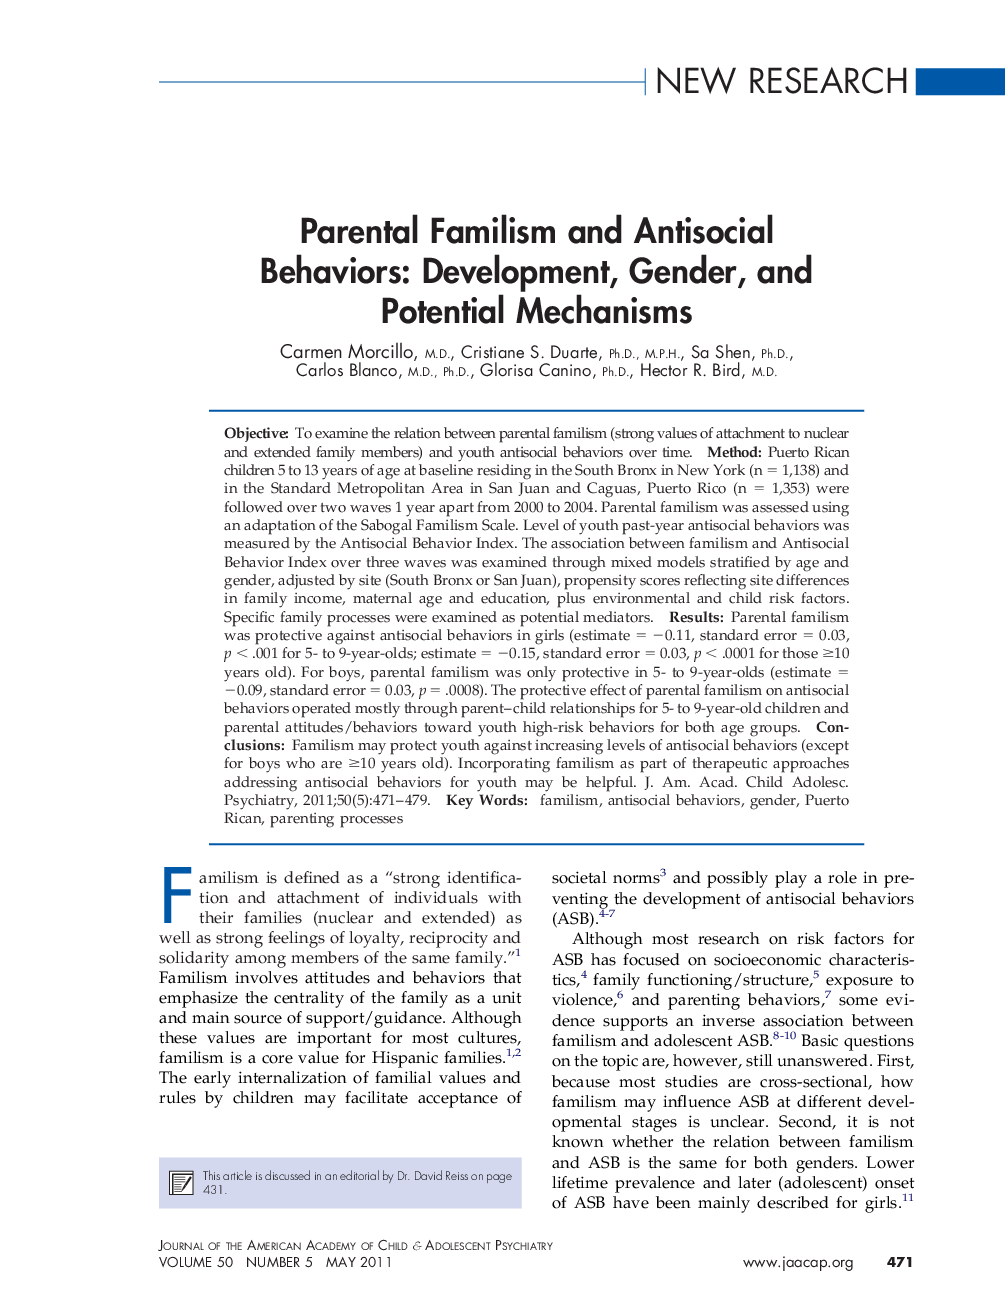 Parental Familism and Antisocial Behaviors: Development, Gender, and Potential Mechanisms